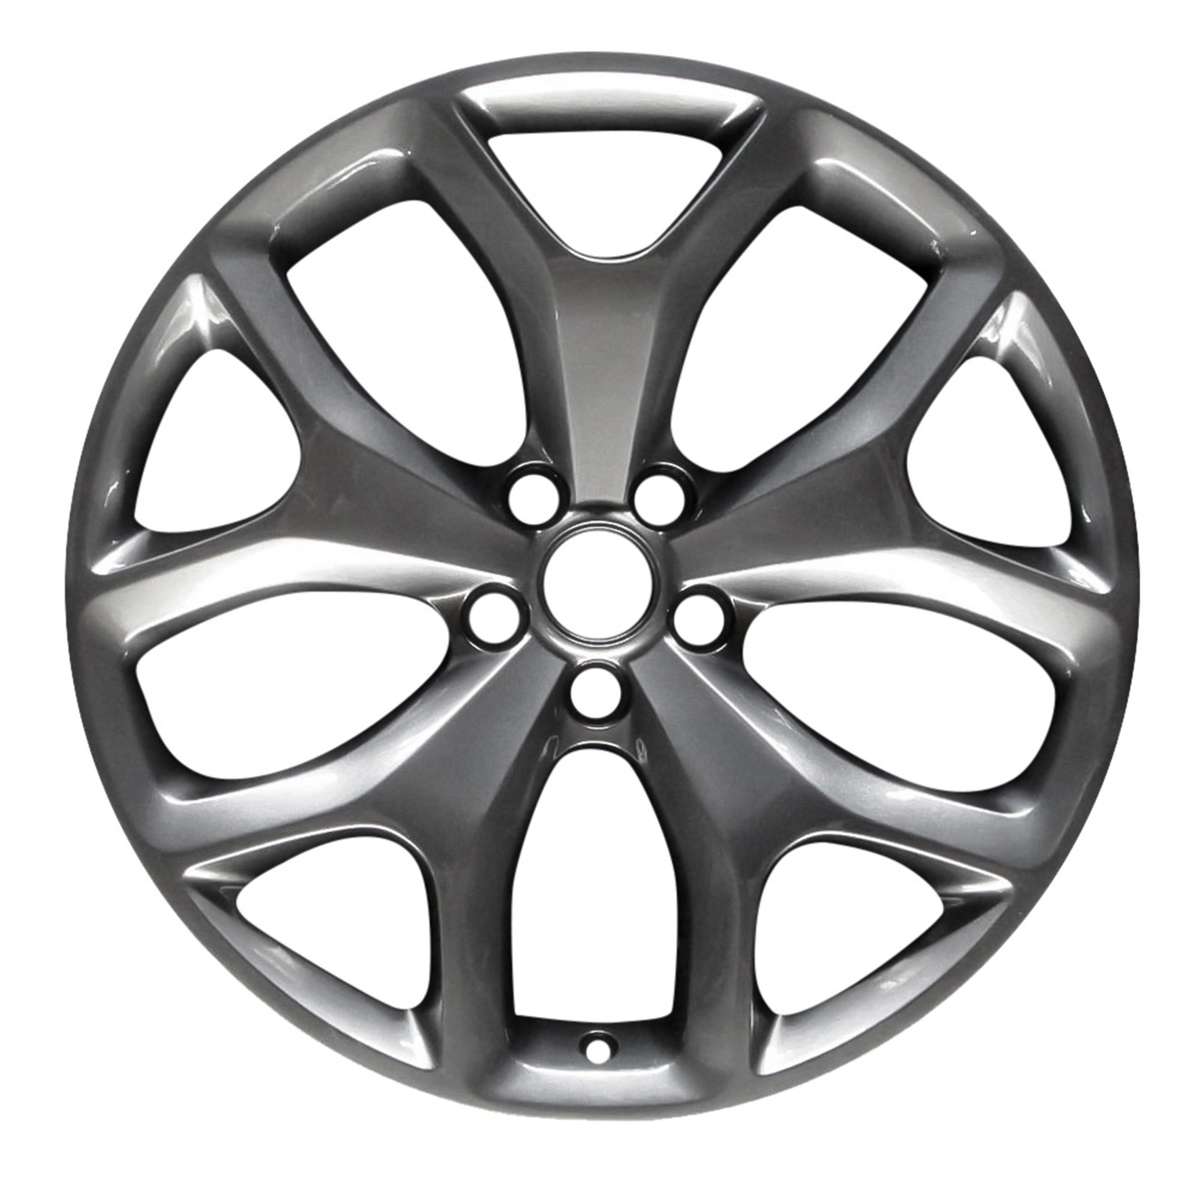 2013 Dodge Charger 20" OEM Wheel Rim W2523C